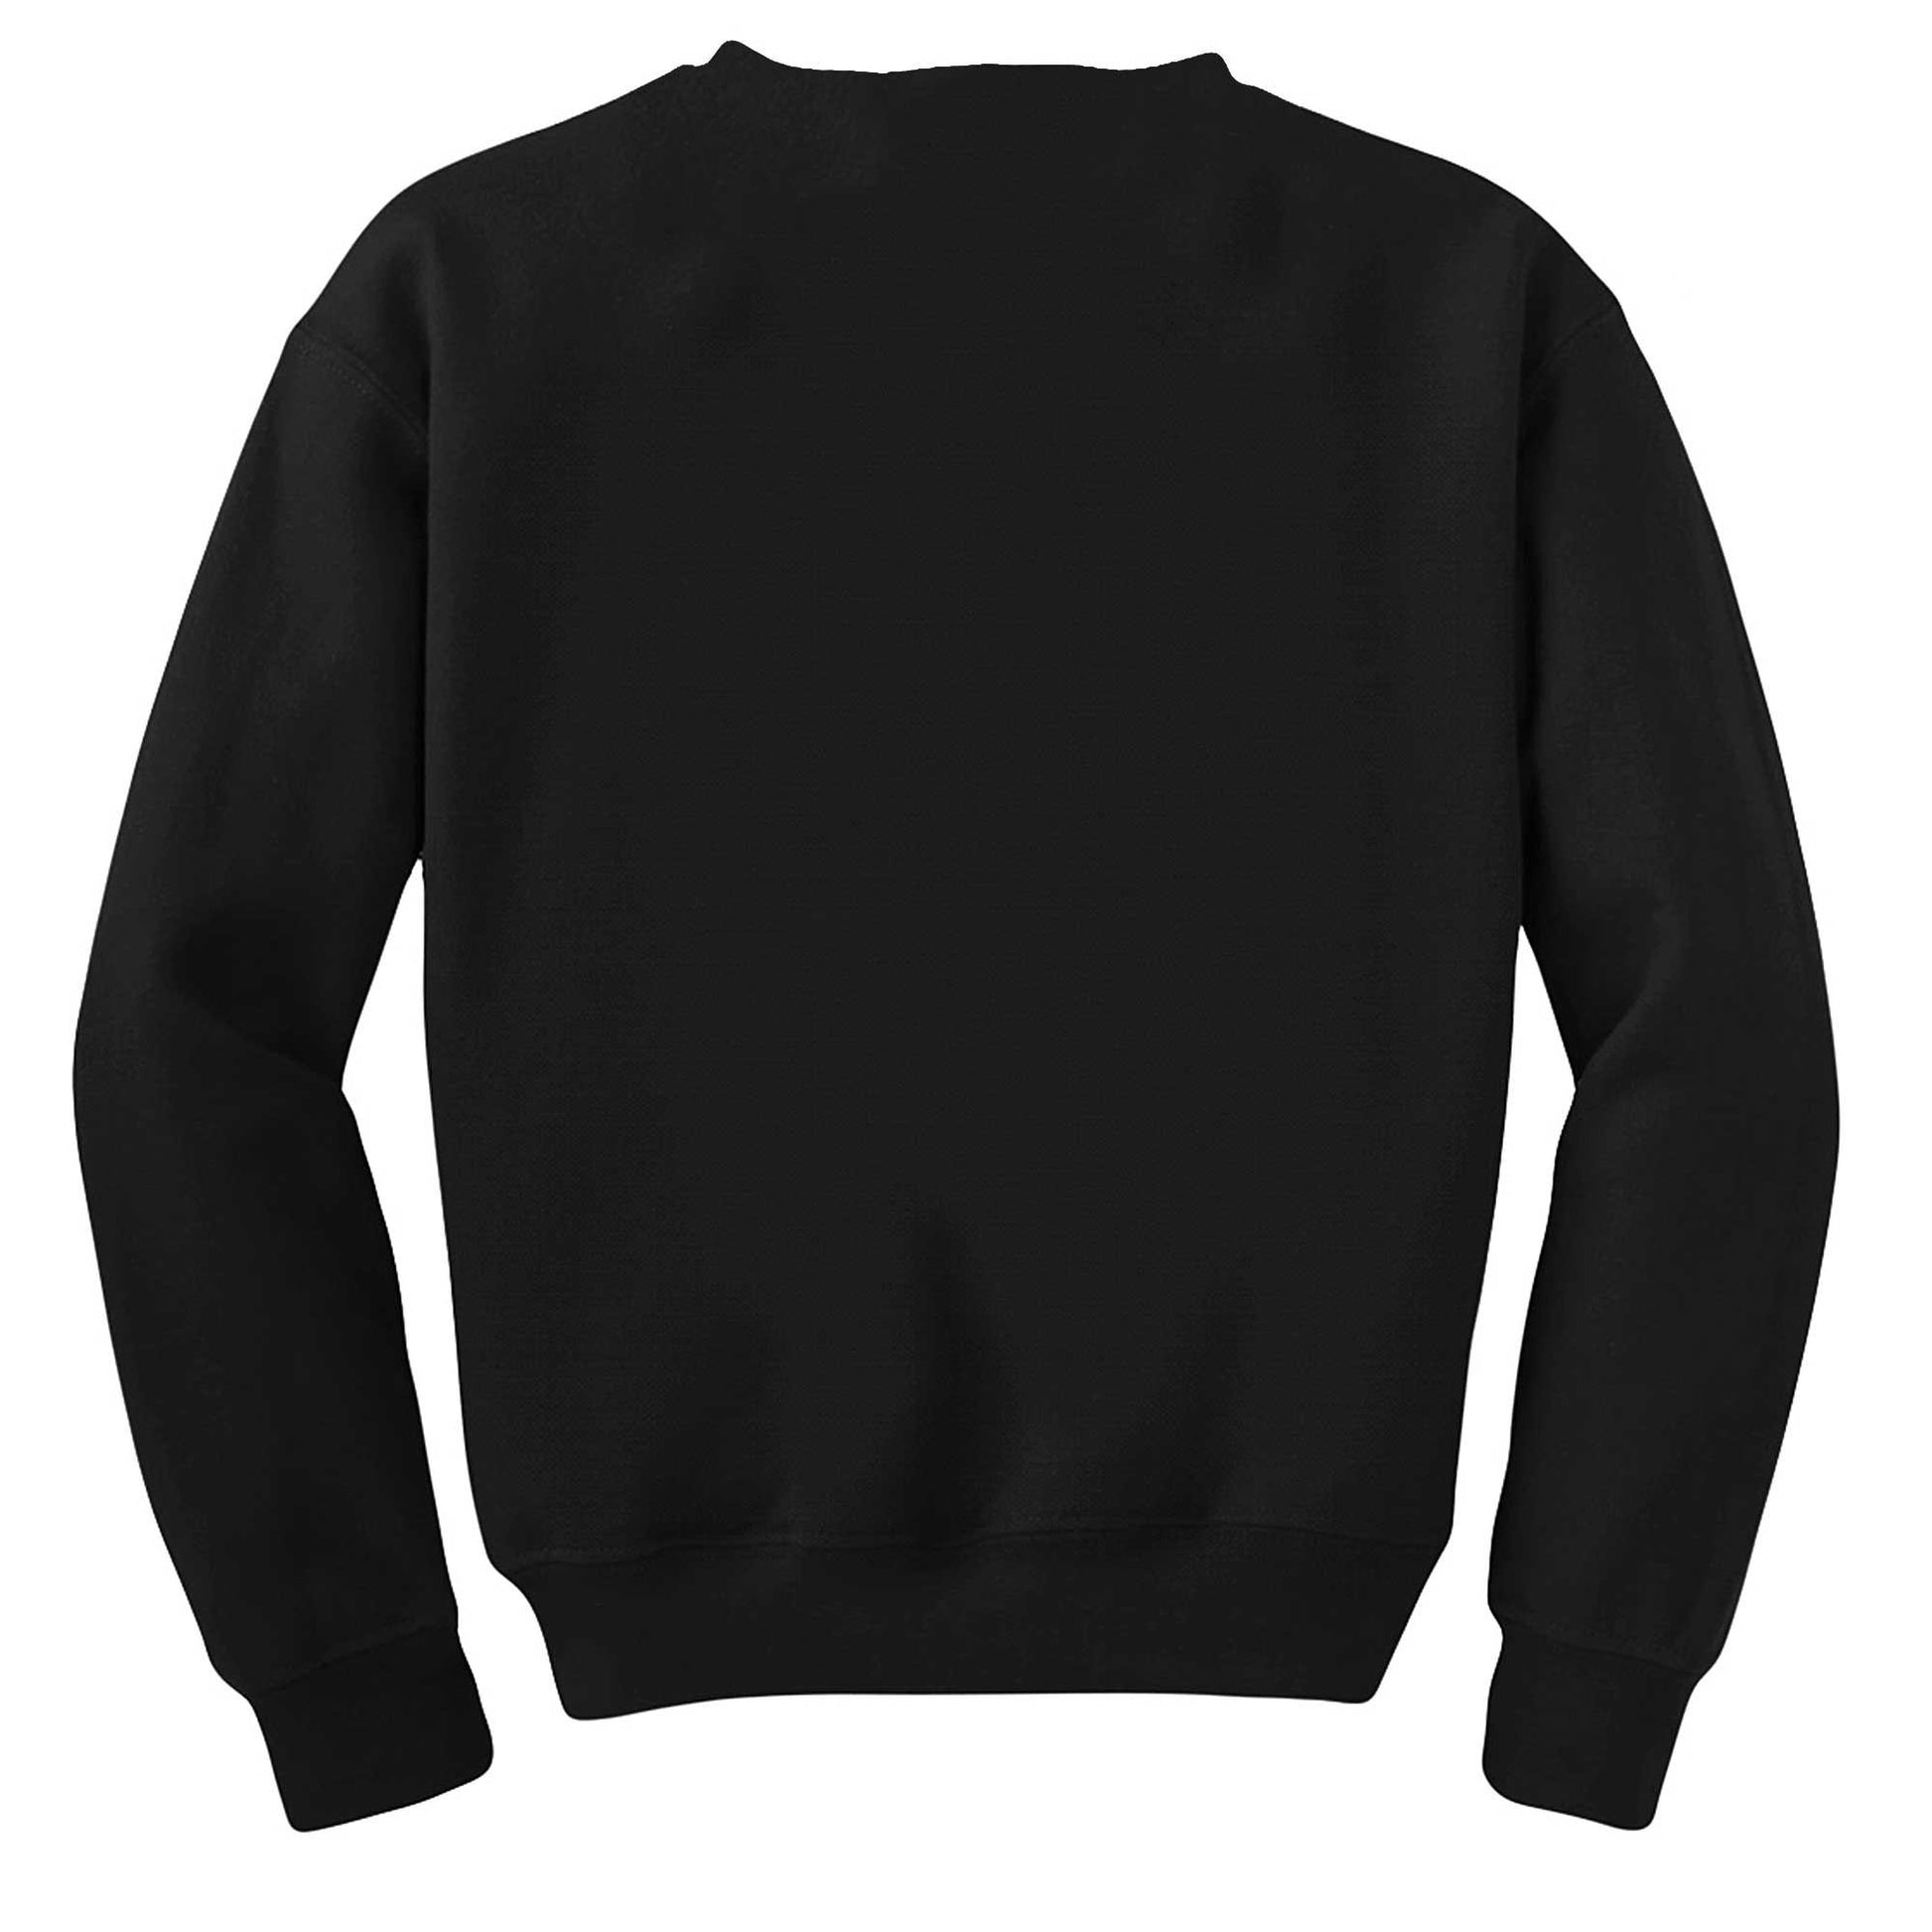 Boğa Siluet Siyah Sweatshirt - Zepplingiyim